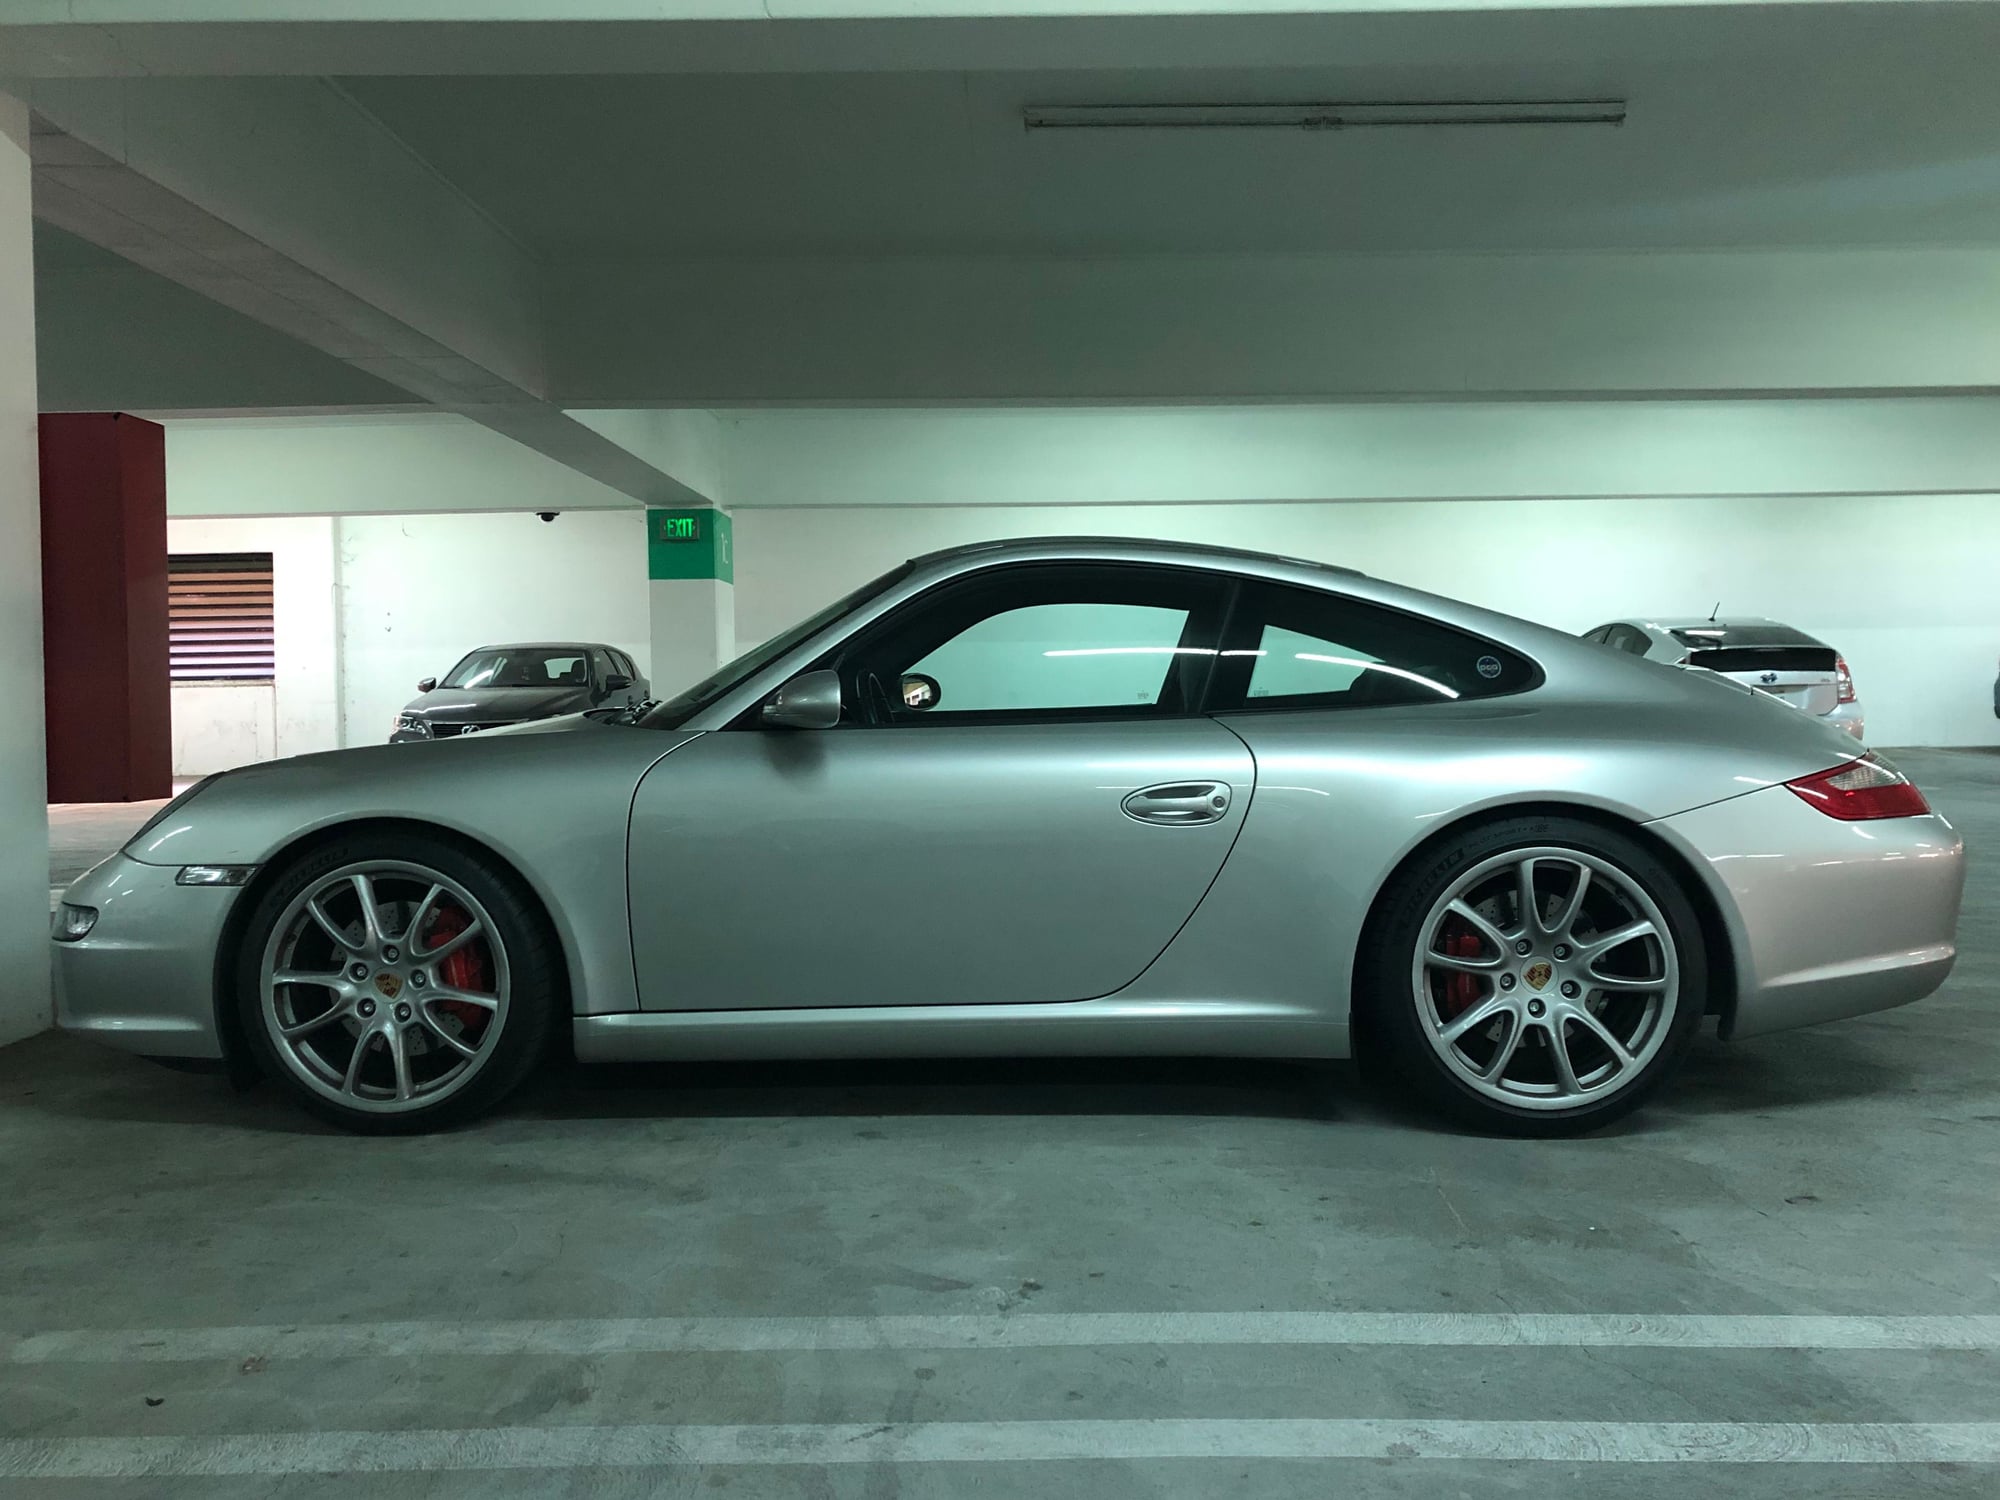 Lets see your 997 - Page 84 - Rennlist - Porsche 